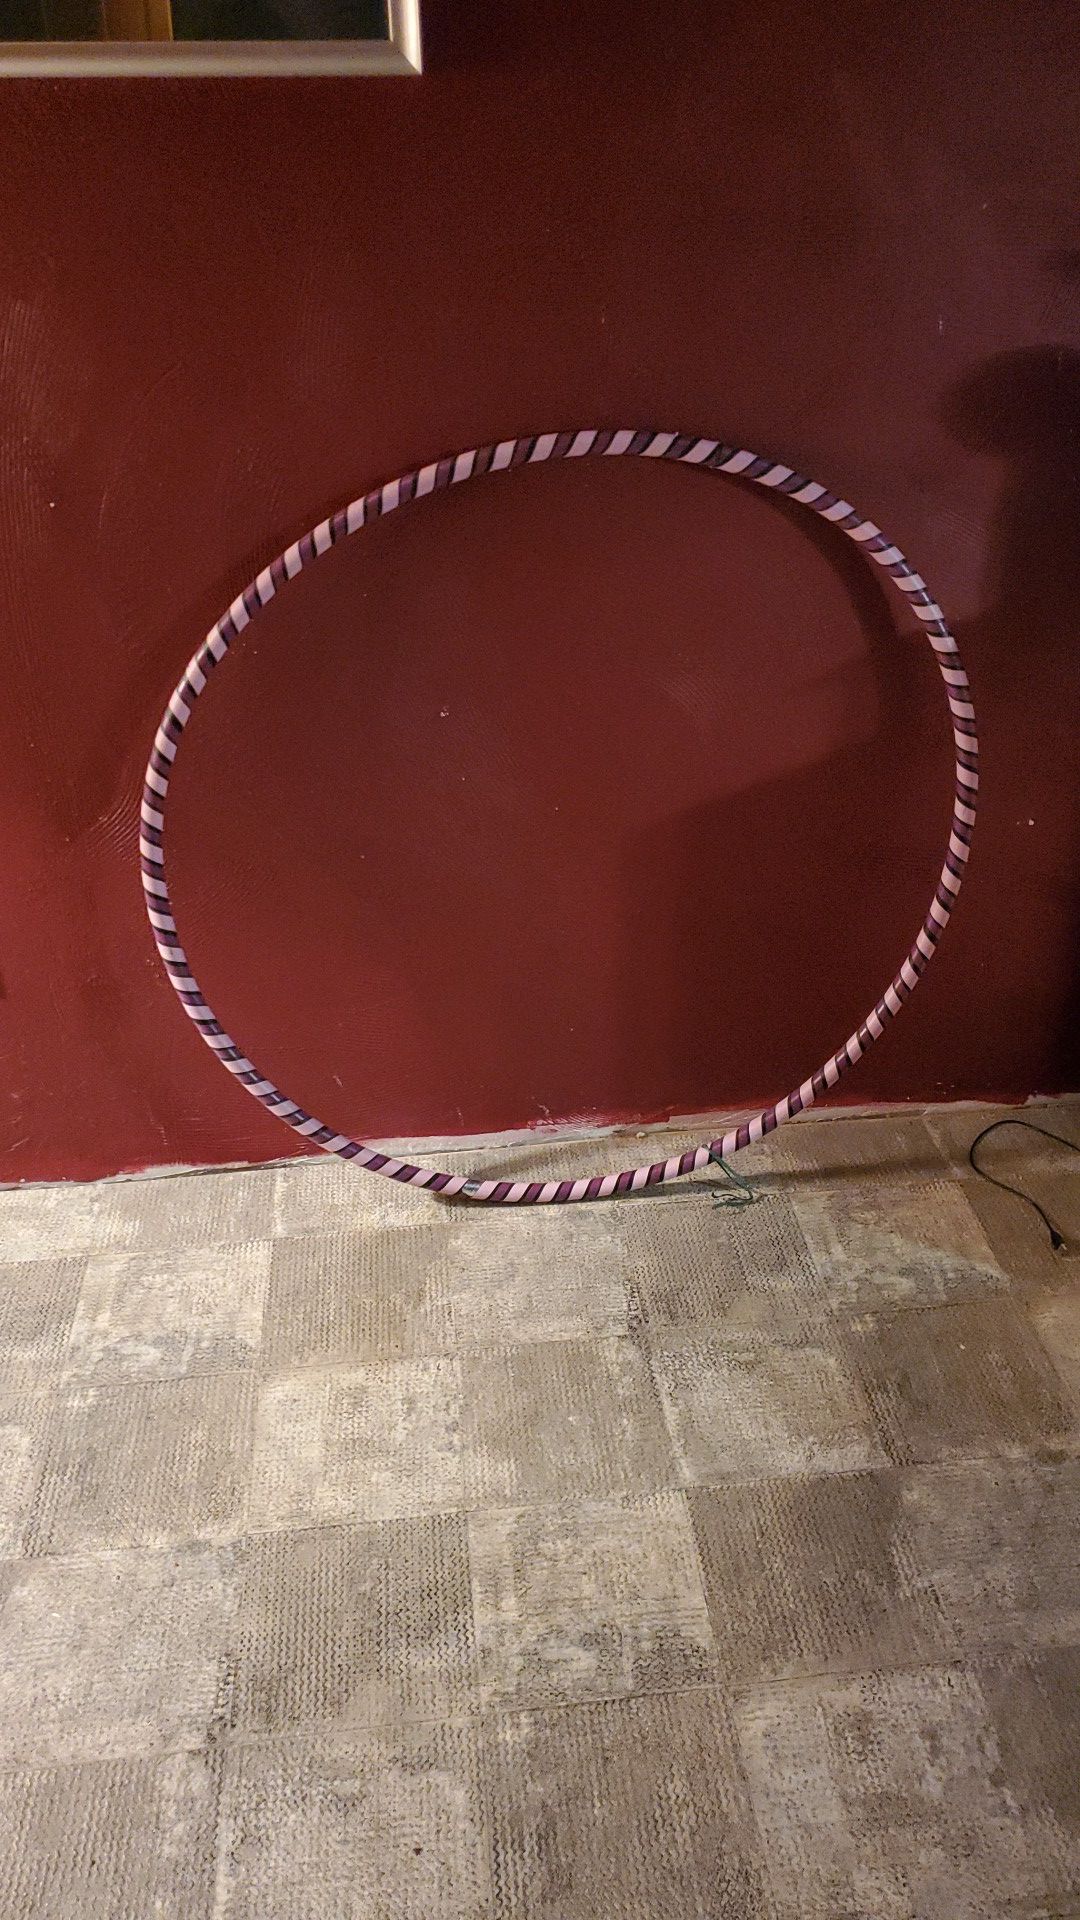 Hula hoop: weighted